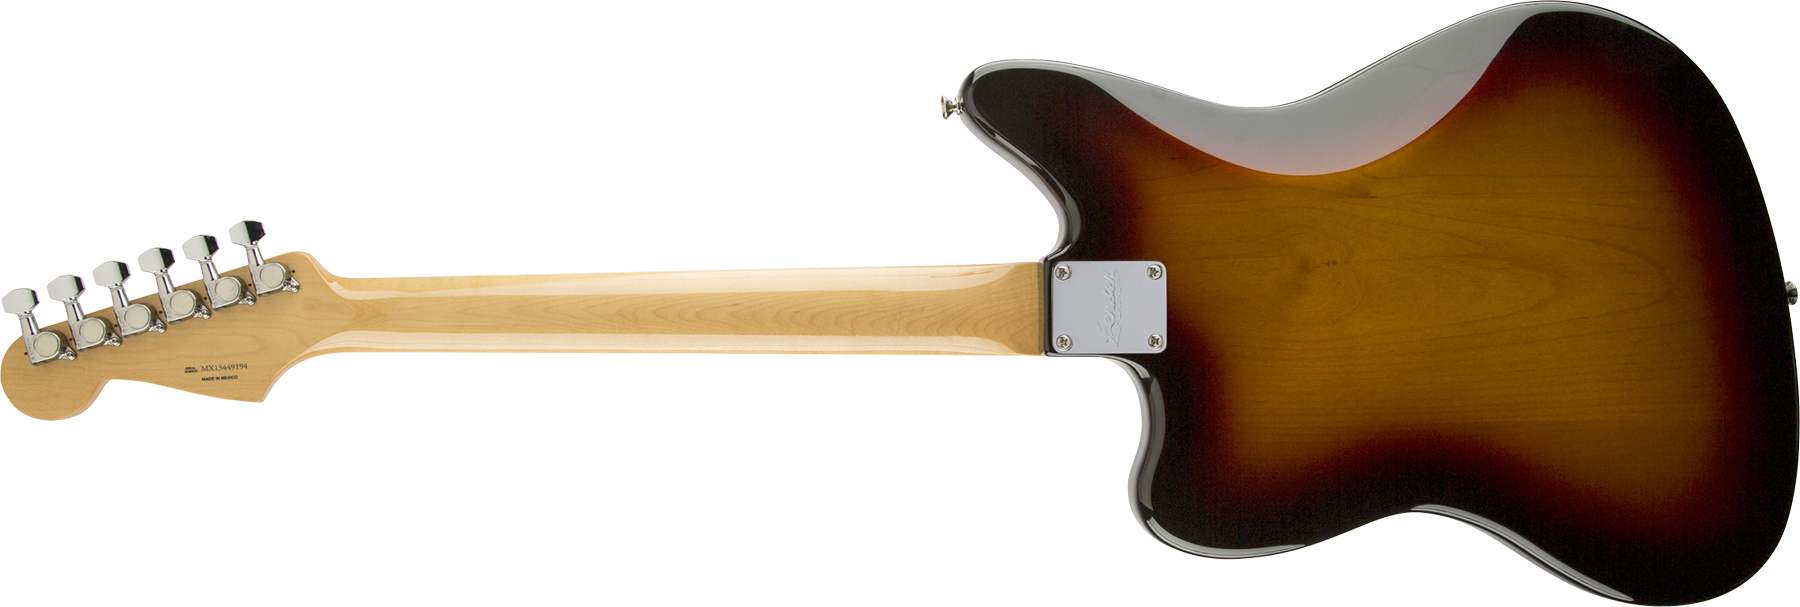 Fender Kurt Cobain Jaguar Mex Hh Trem Rw - 3-color Sunburst - Retro rock electric guitar - Variation 1